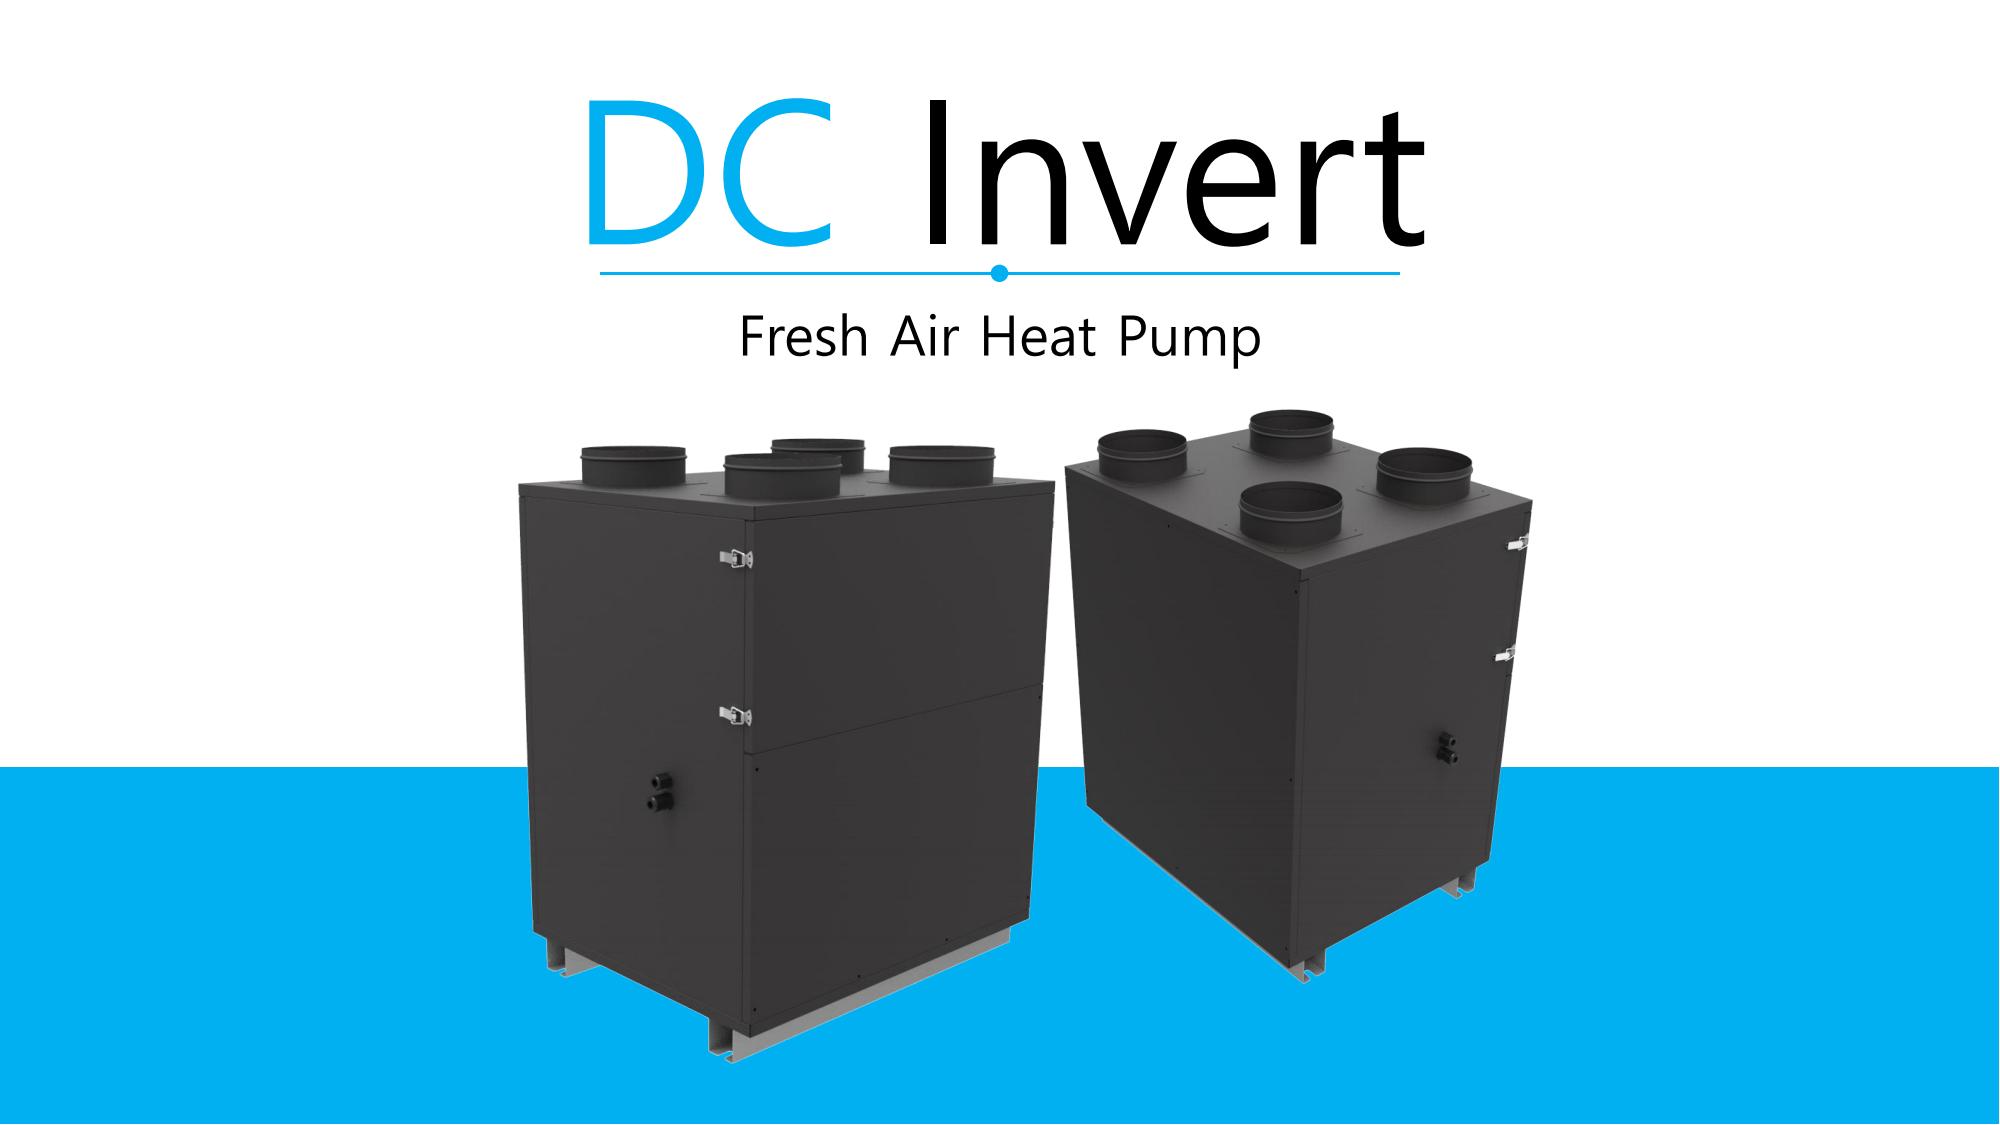 DC Inverter fresh air heat pump_00